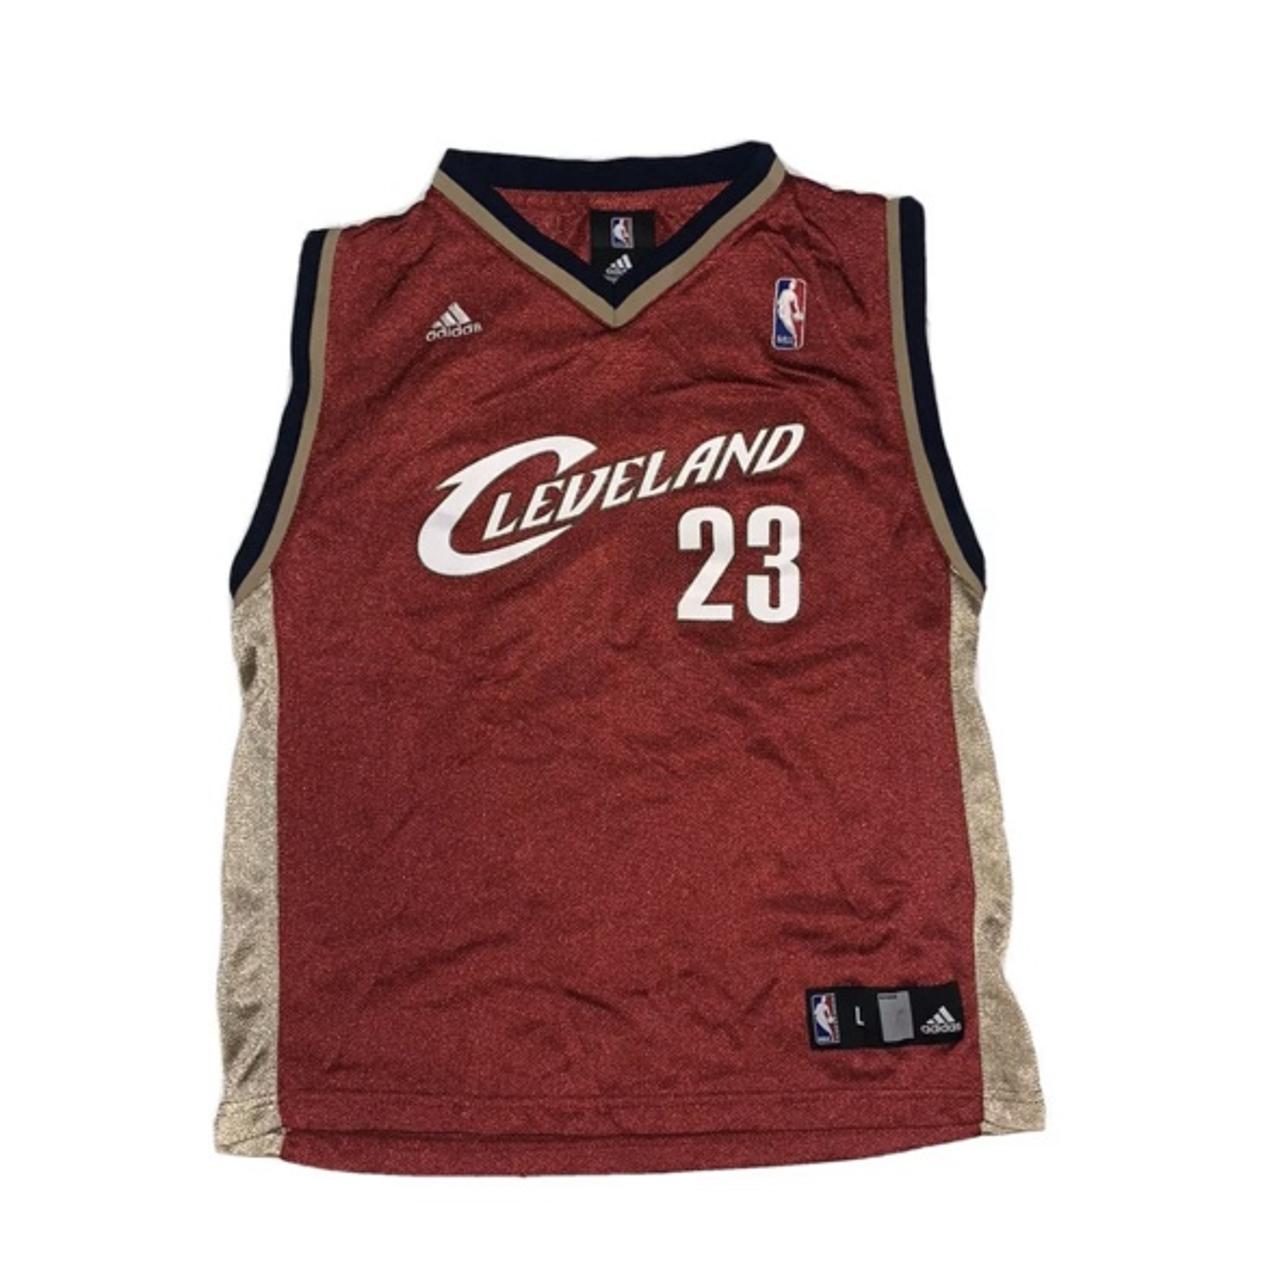 Lebron James #23 Cleveland Cavaliers 2010 Boys M adidas NBA basketball  jersey 